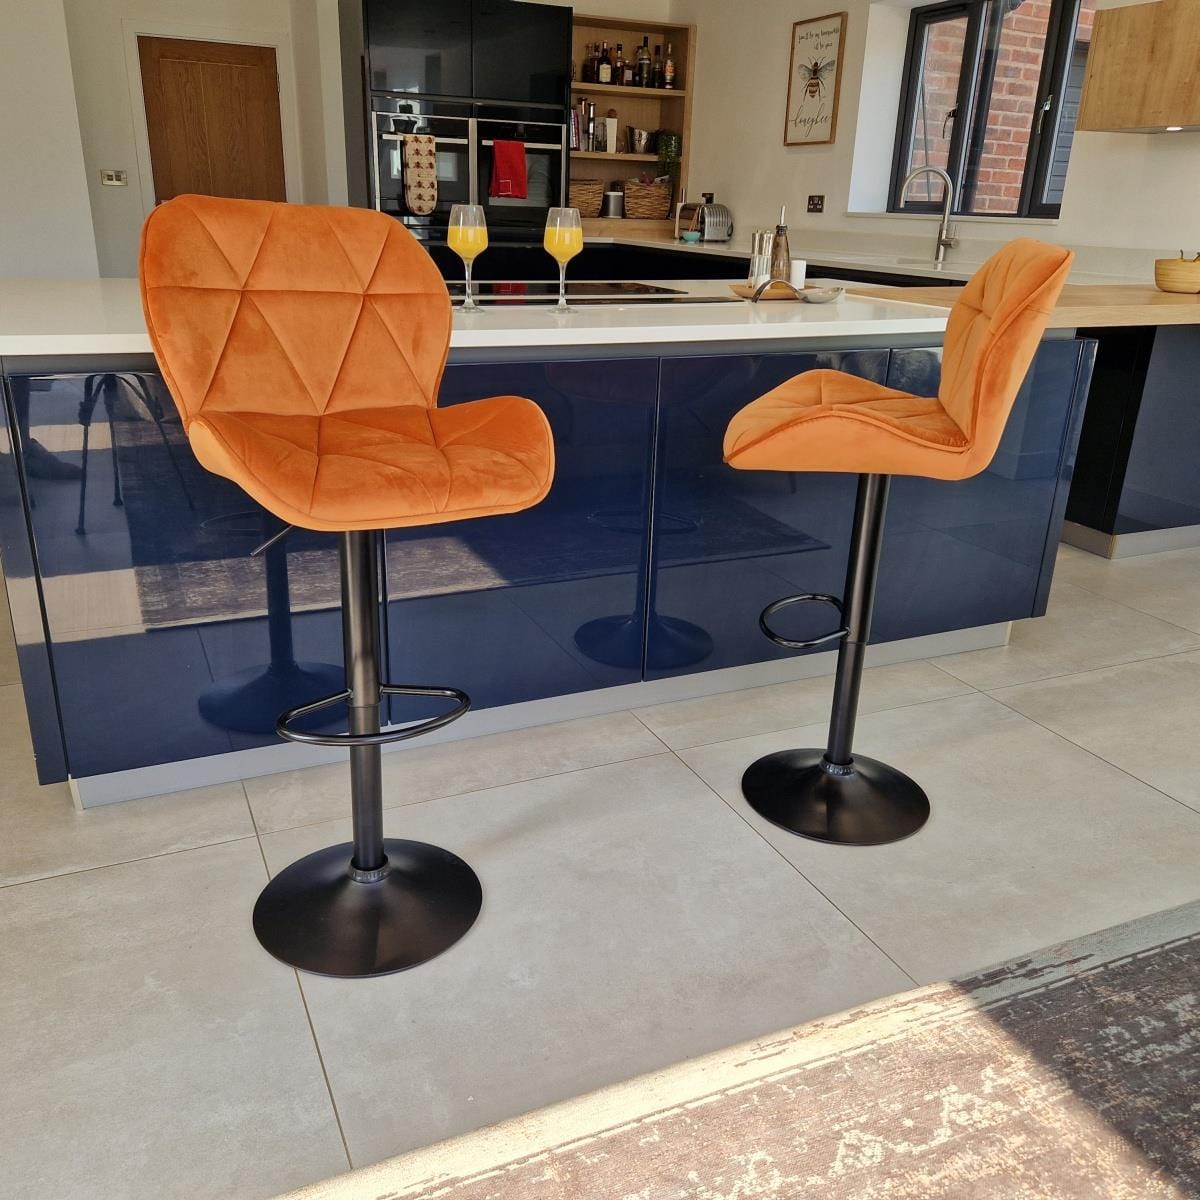 Quatropi Set of 4 Modern Kitchen Bar Stools - Premium Orange Velvet - Adjustable Seat Height